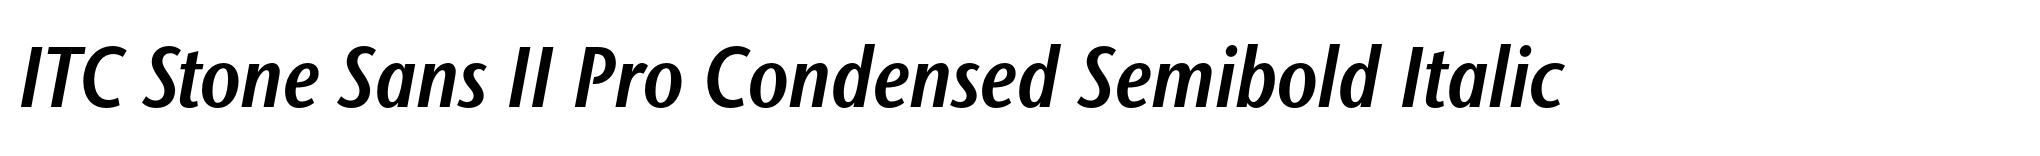 ITC Stone Sans II Pro Condensed Semibold Italic image